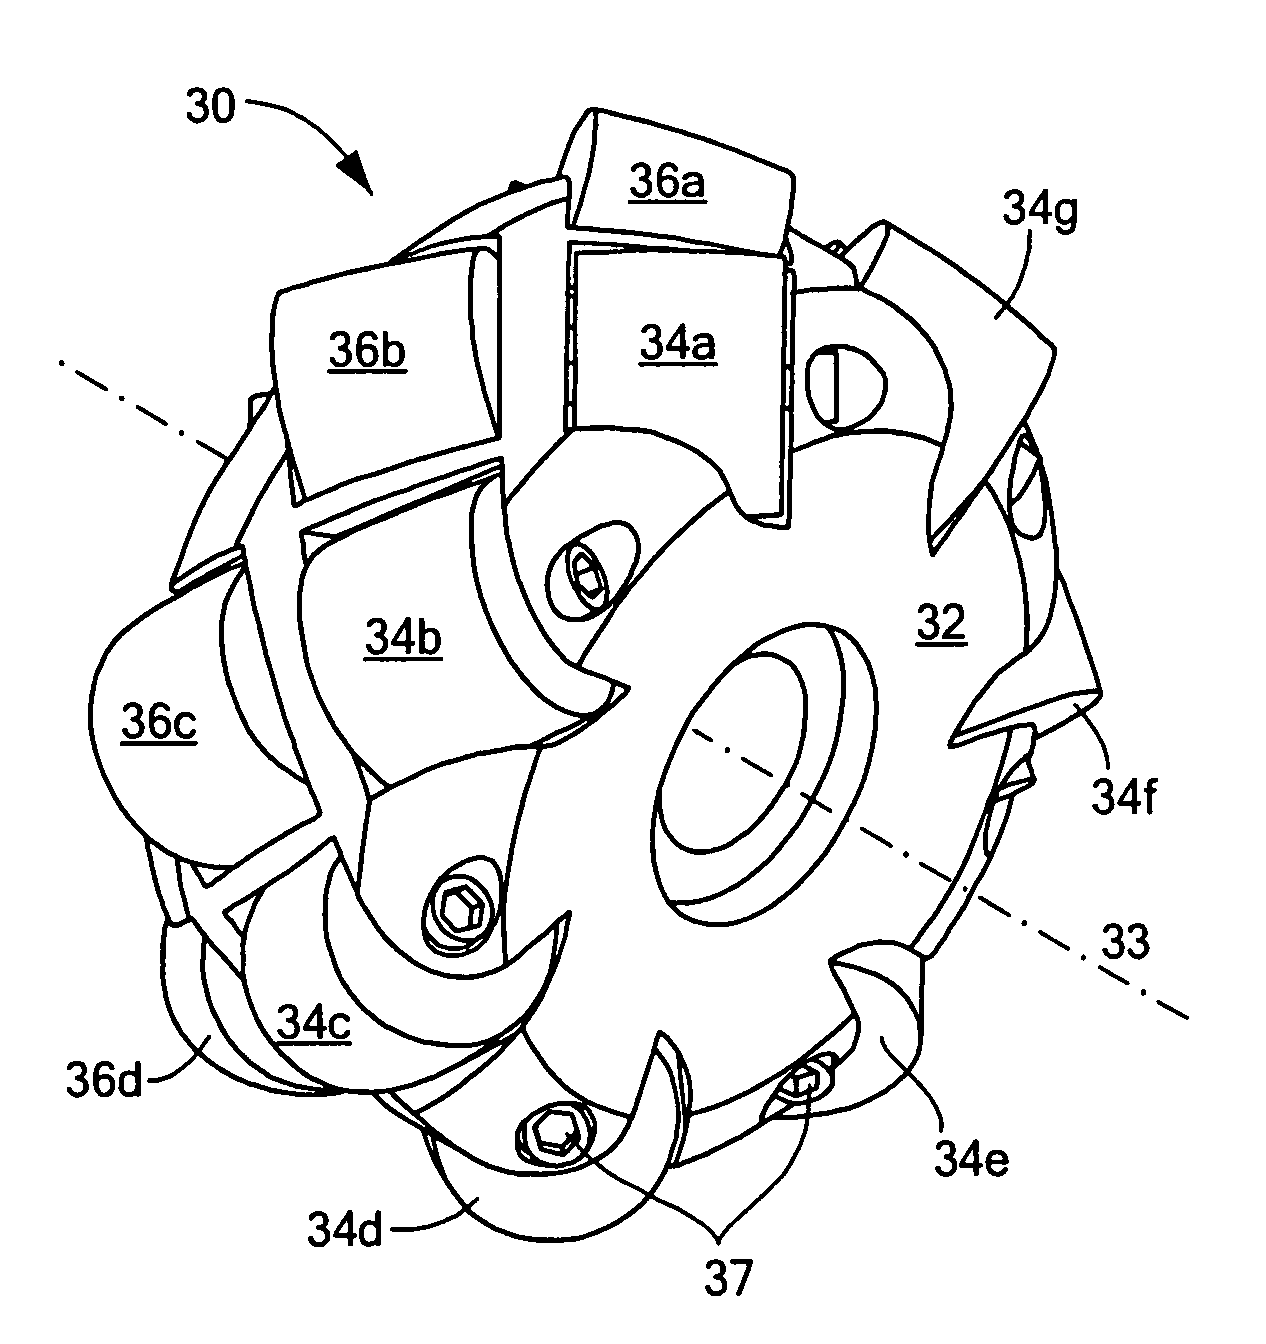 Omni-directional wheel